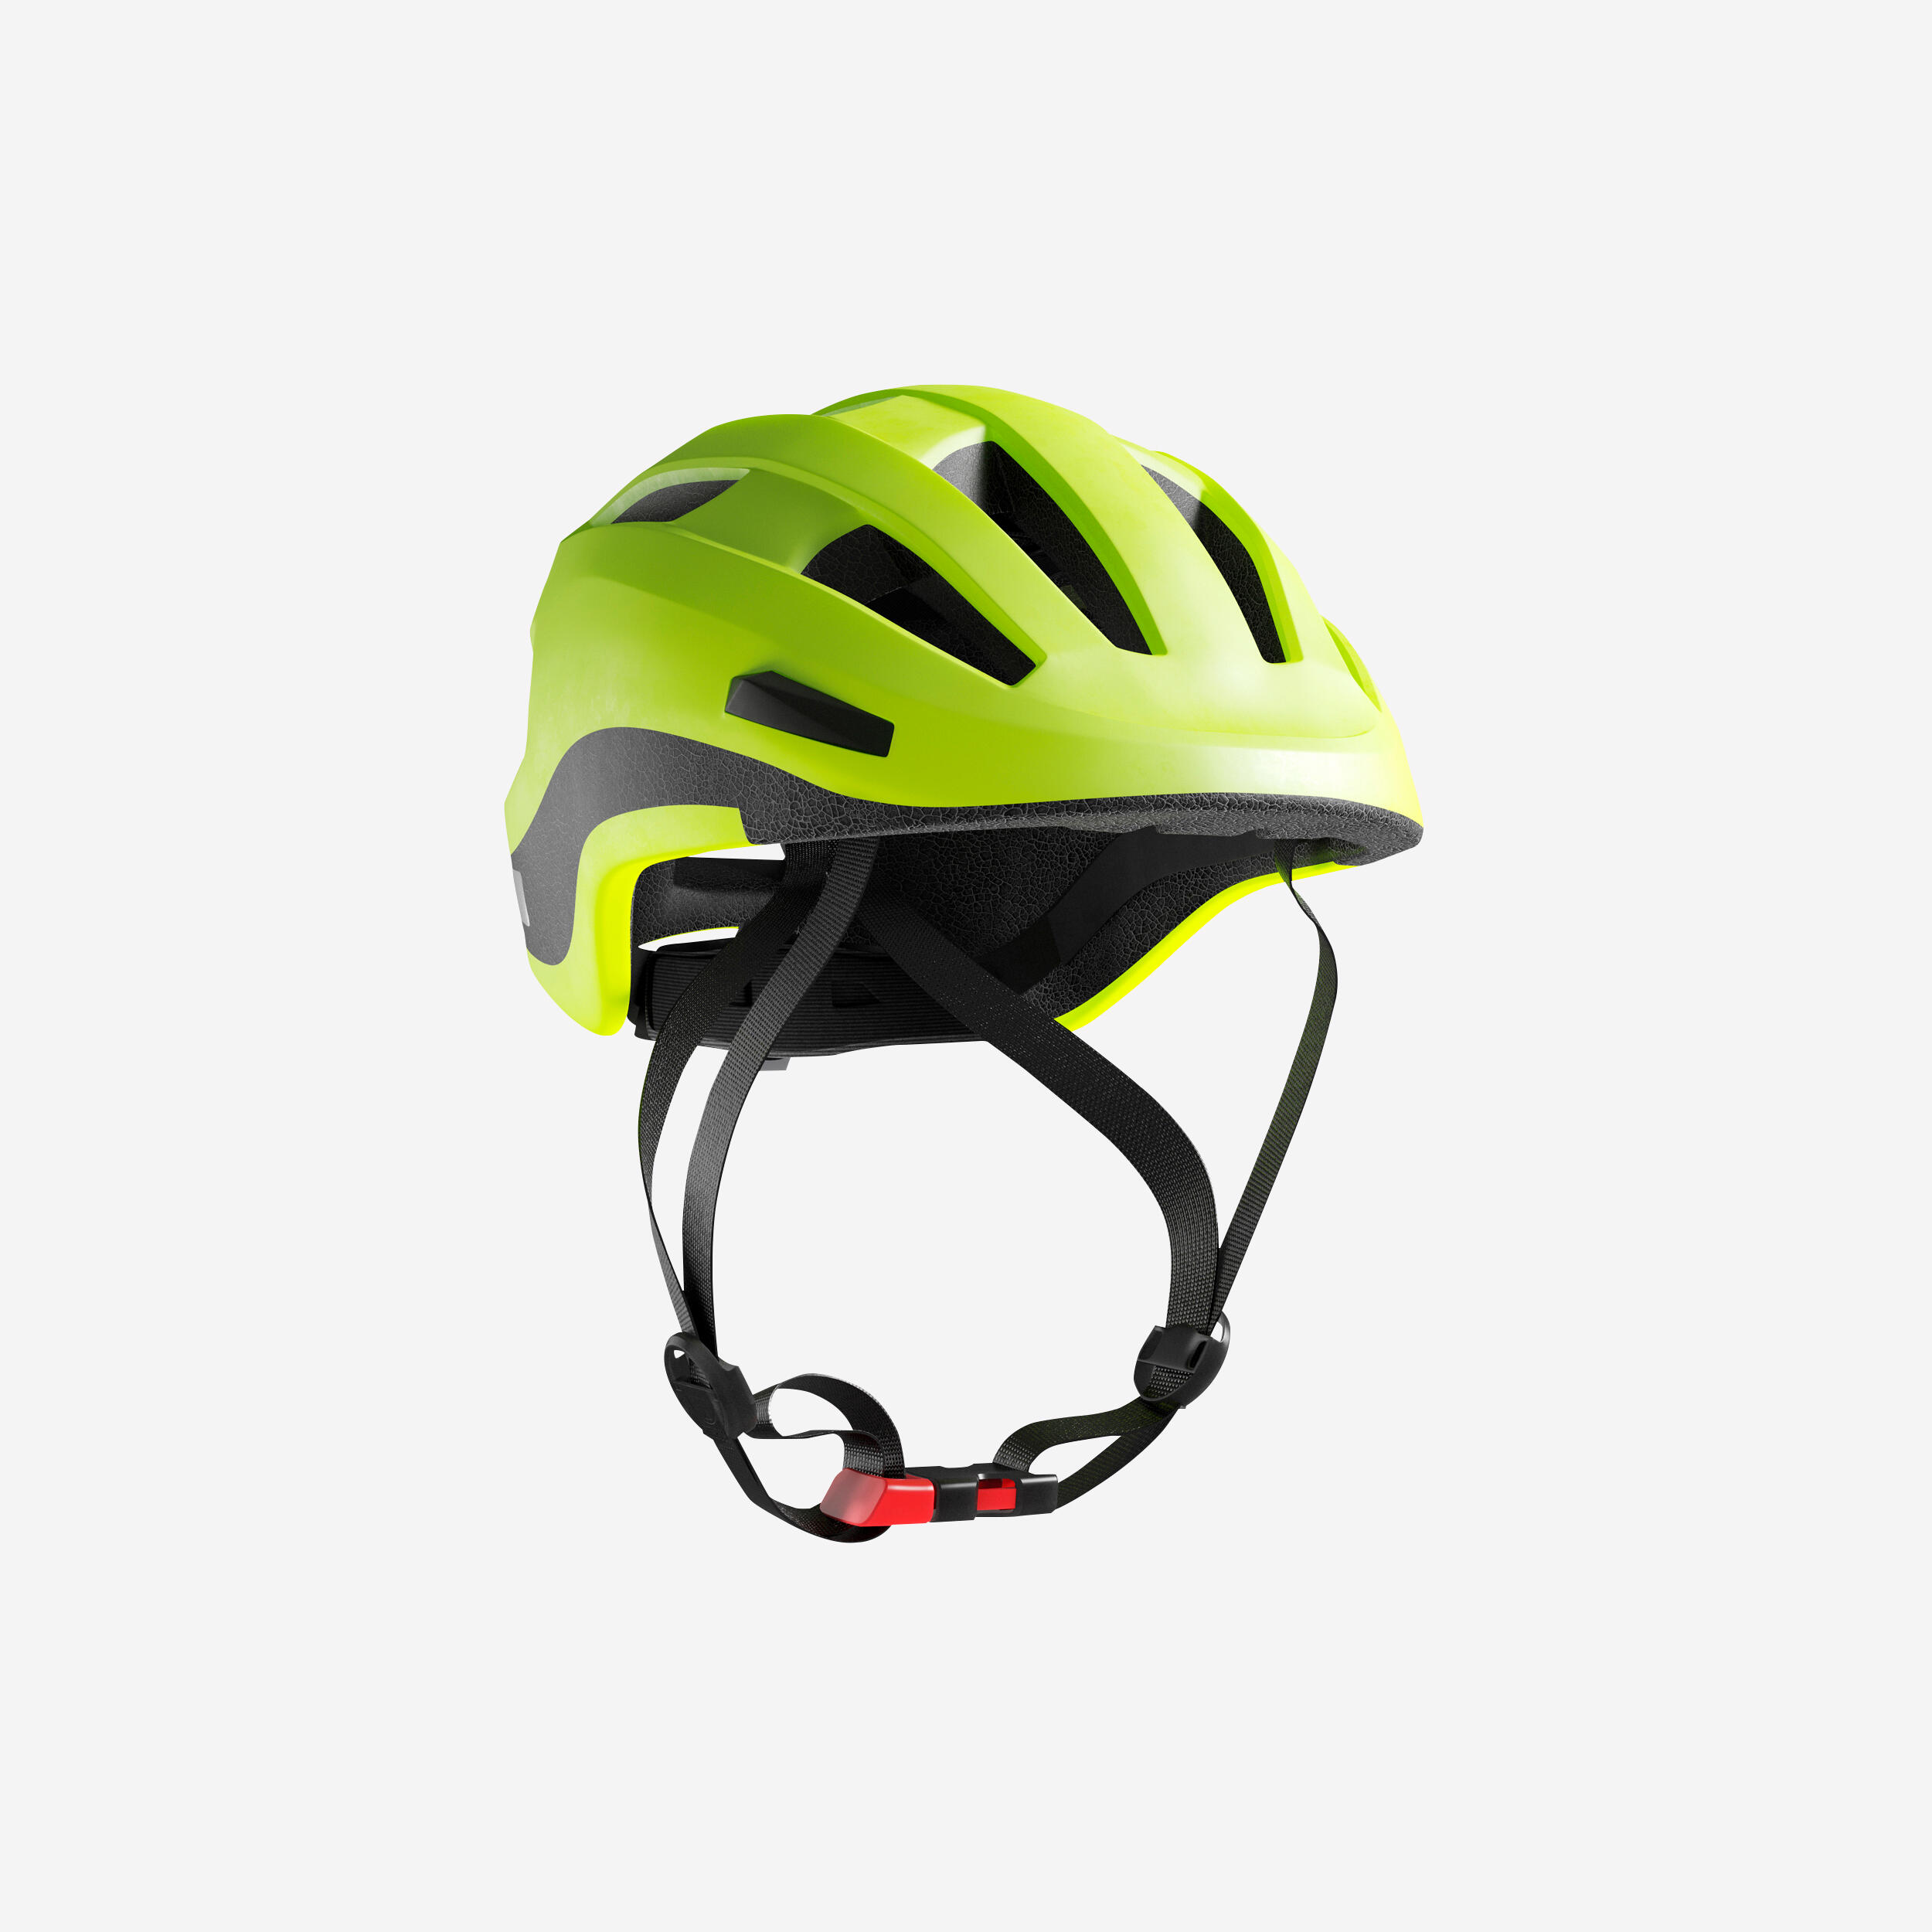 BTWIN 500 City Cycling Helmet - Neon Yellow